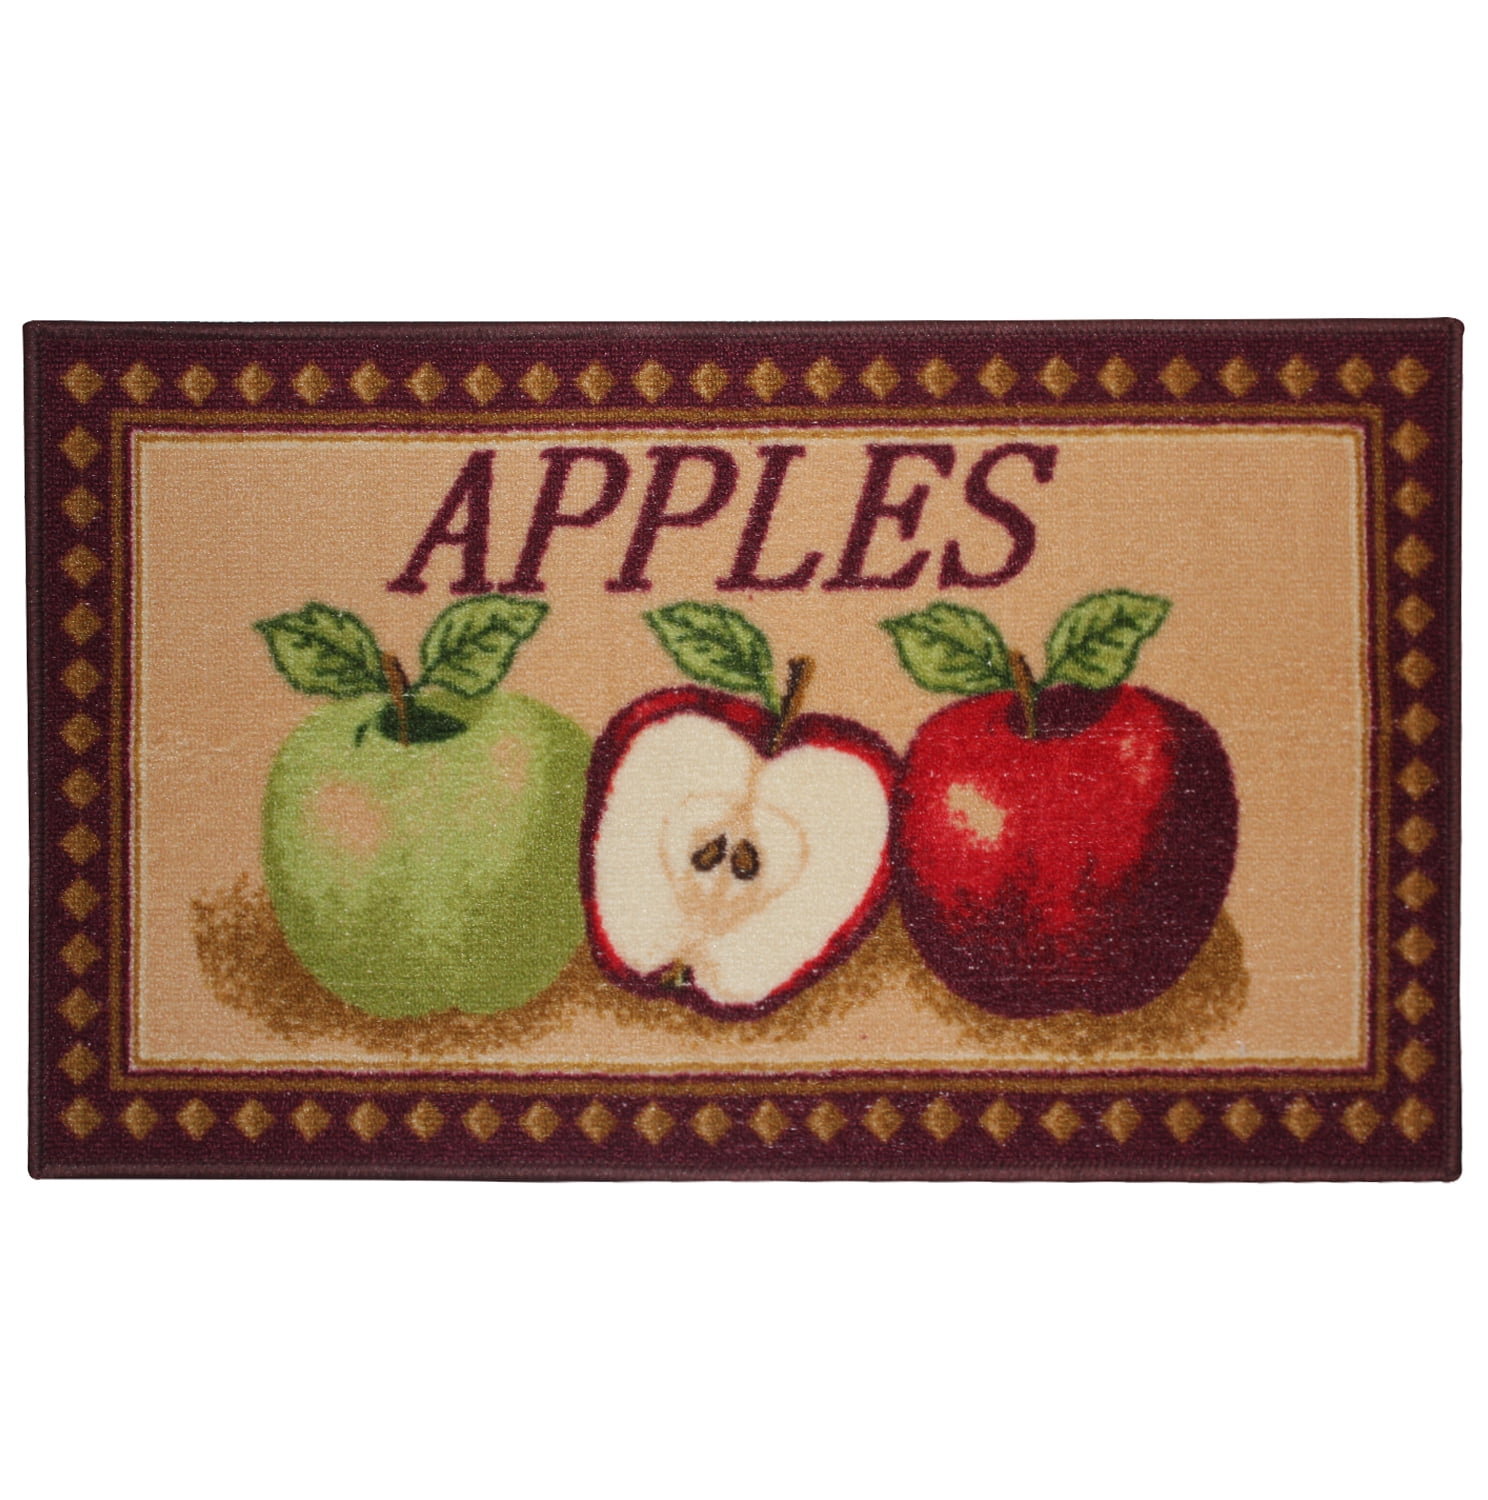 Apple Kitchen Rugs 2 Piece Apples Farmhouse Decor anti Fatigue